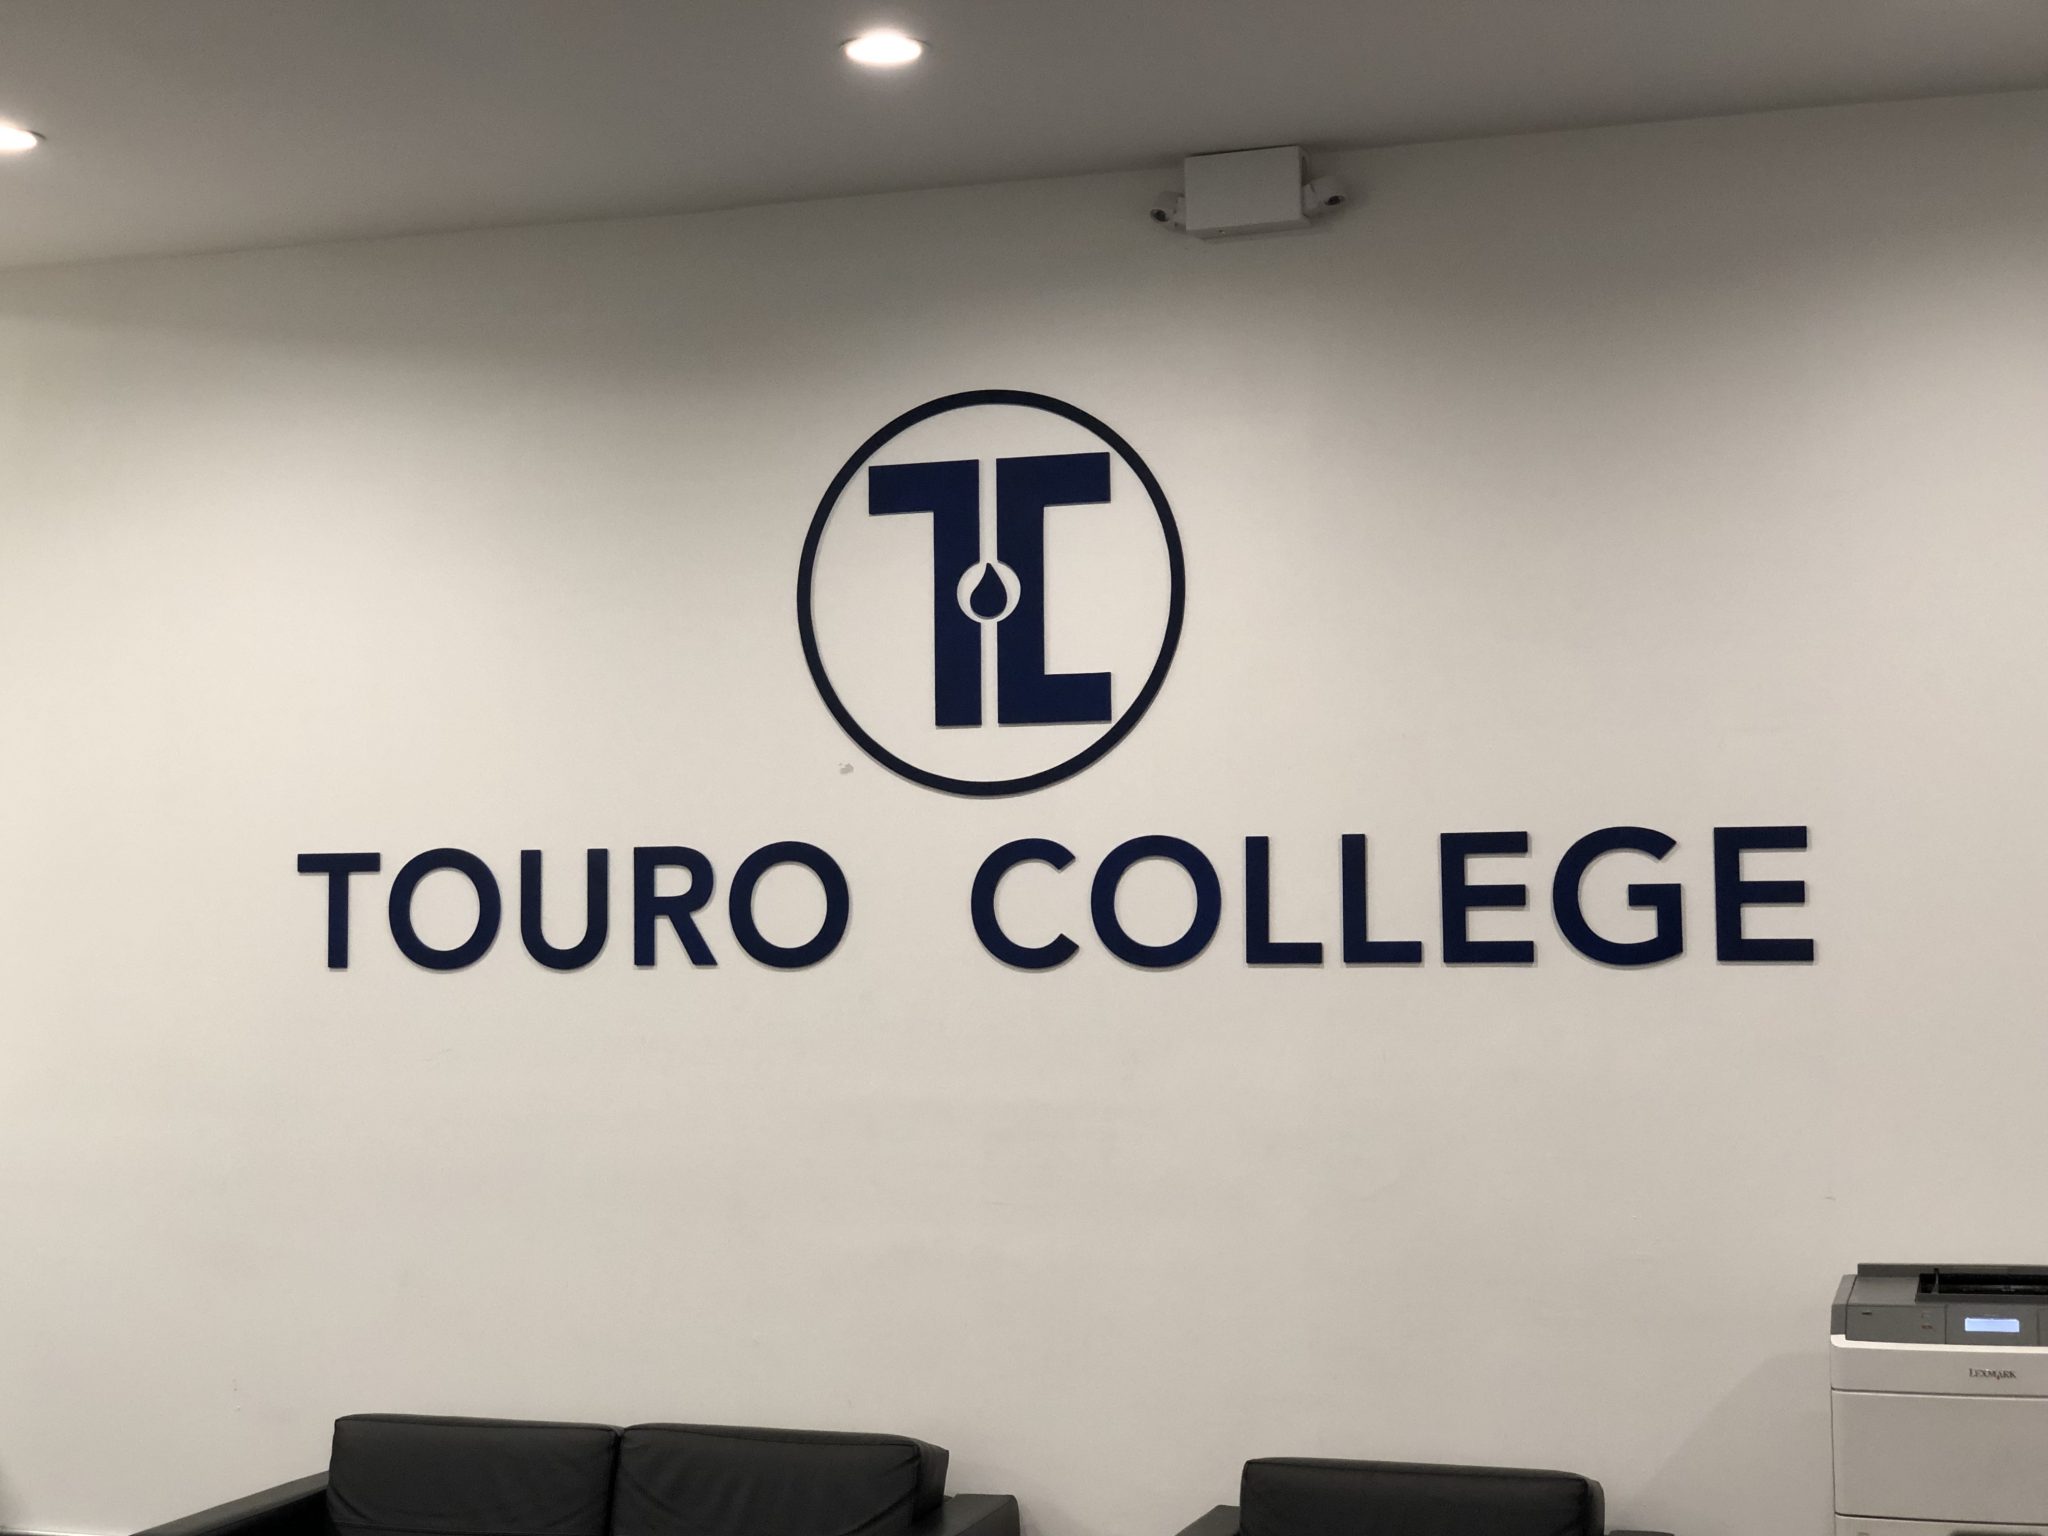 Touro college graduate school of technology